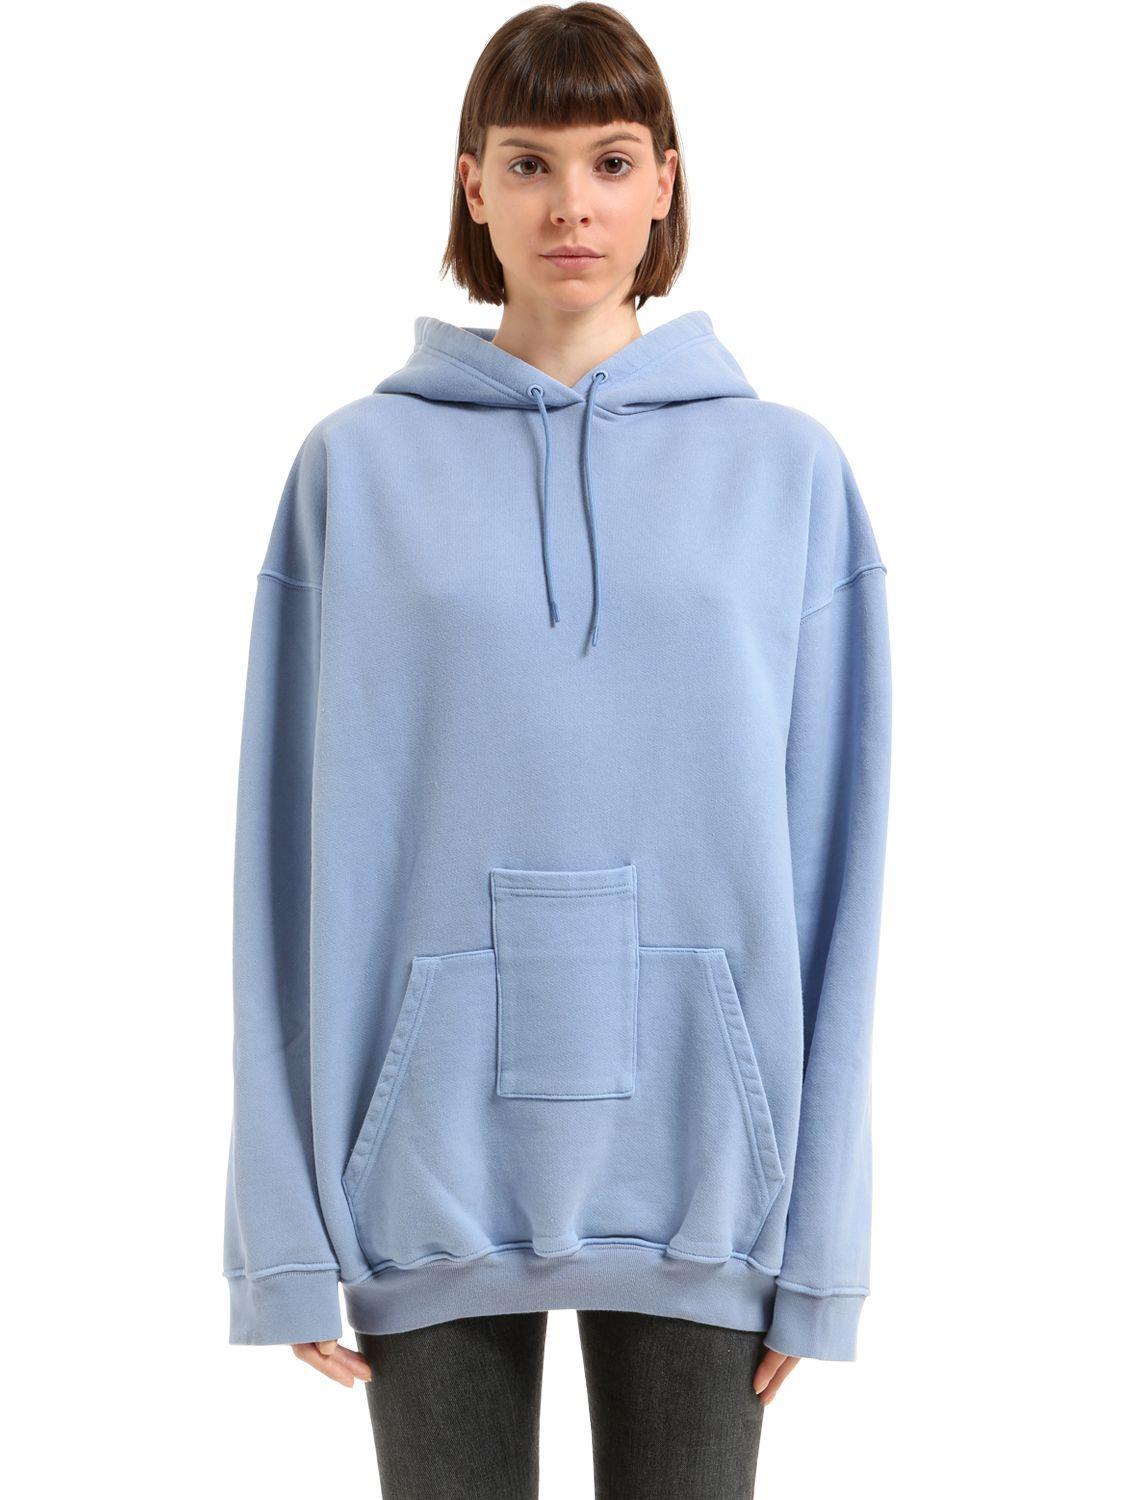 balenciaga hoodie light blue